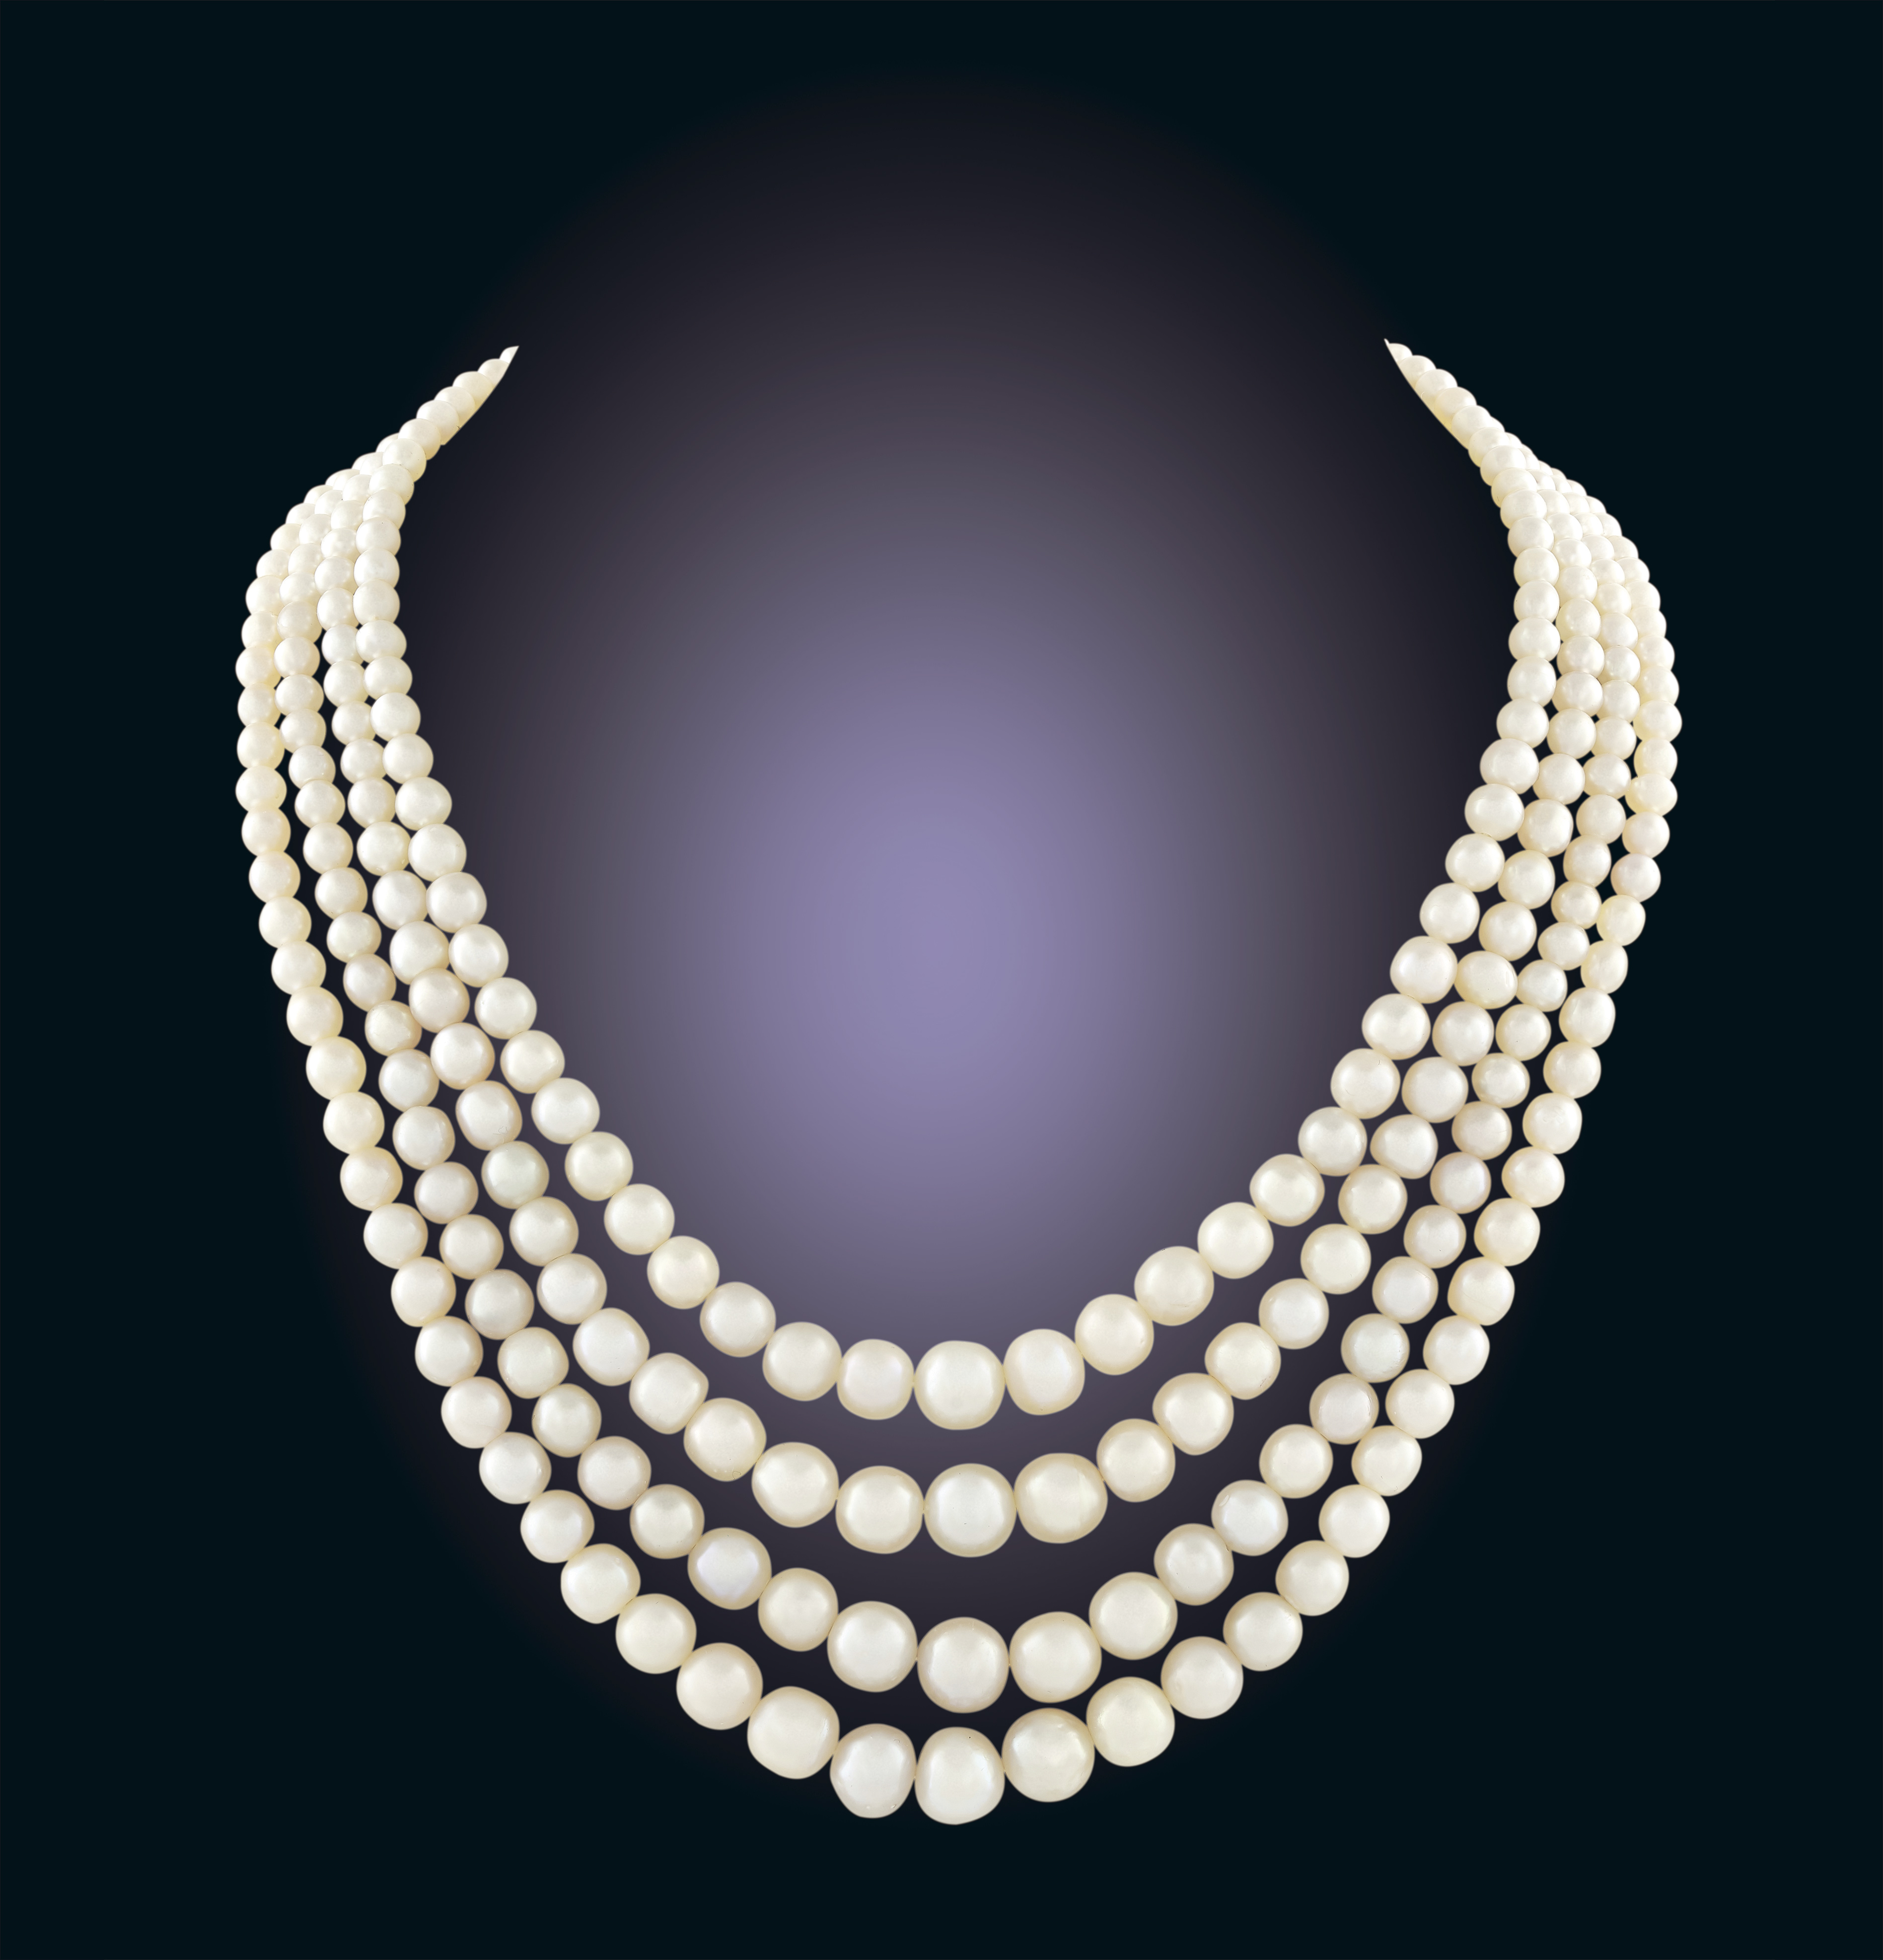 An Elegant Four Row Basra Pearl Necklace, circa 1950, Winning Bid - INR 1,26,18,375, sold at AstaGuru Heirloom auction in 2021.